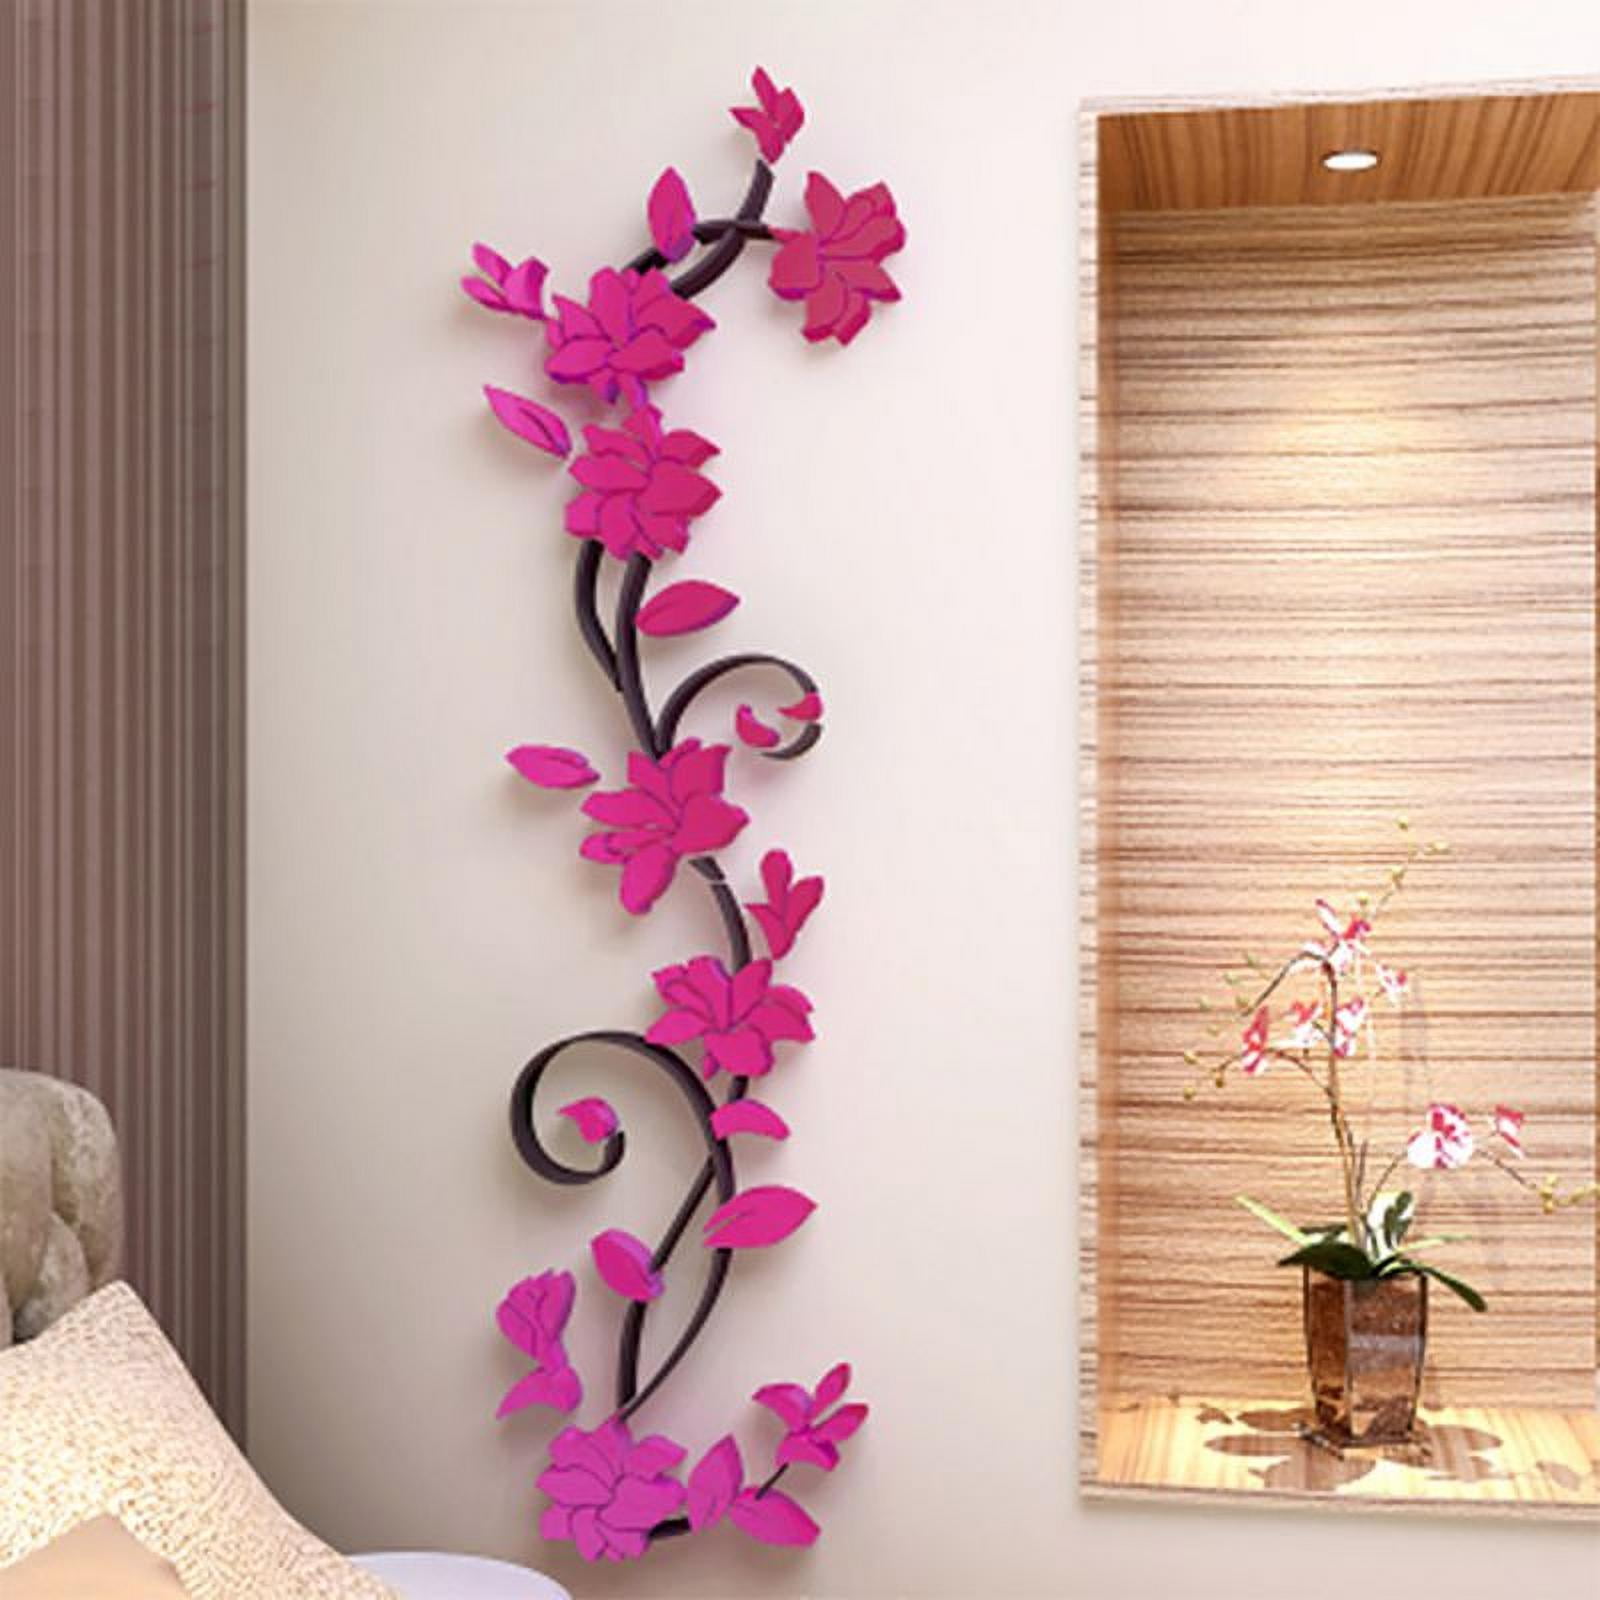 3D Flower Wall Stickers Decals Vinyl Mural Art Home DIY Decor Removable